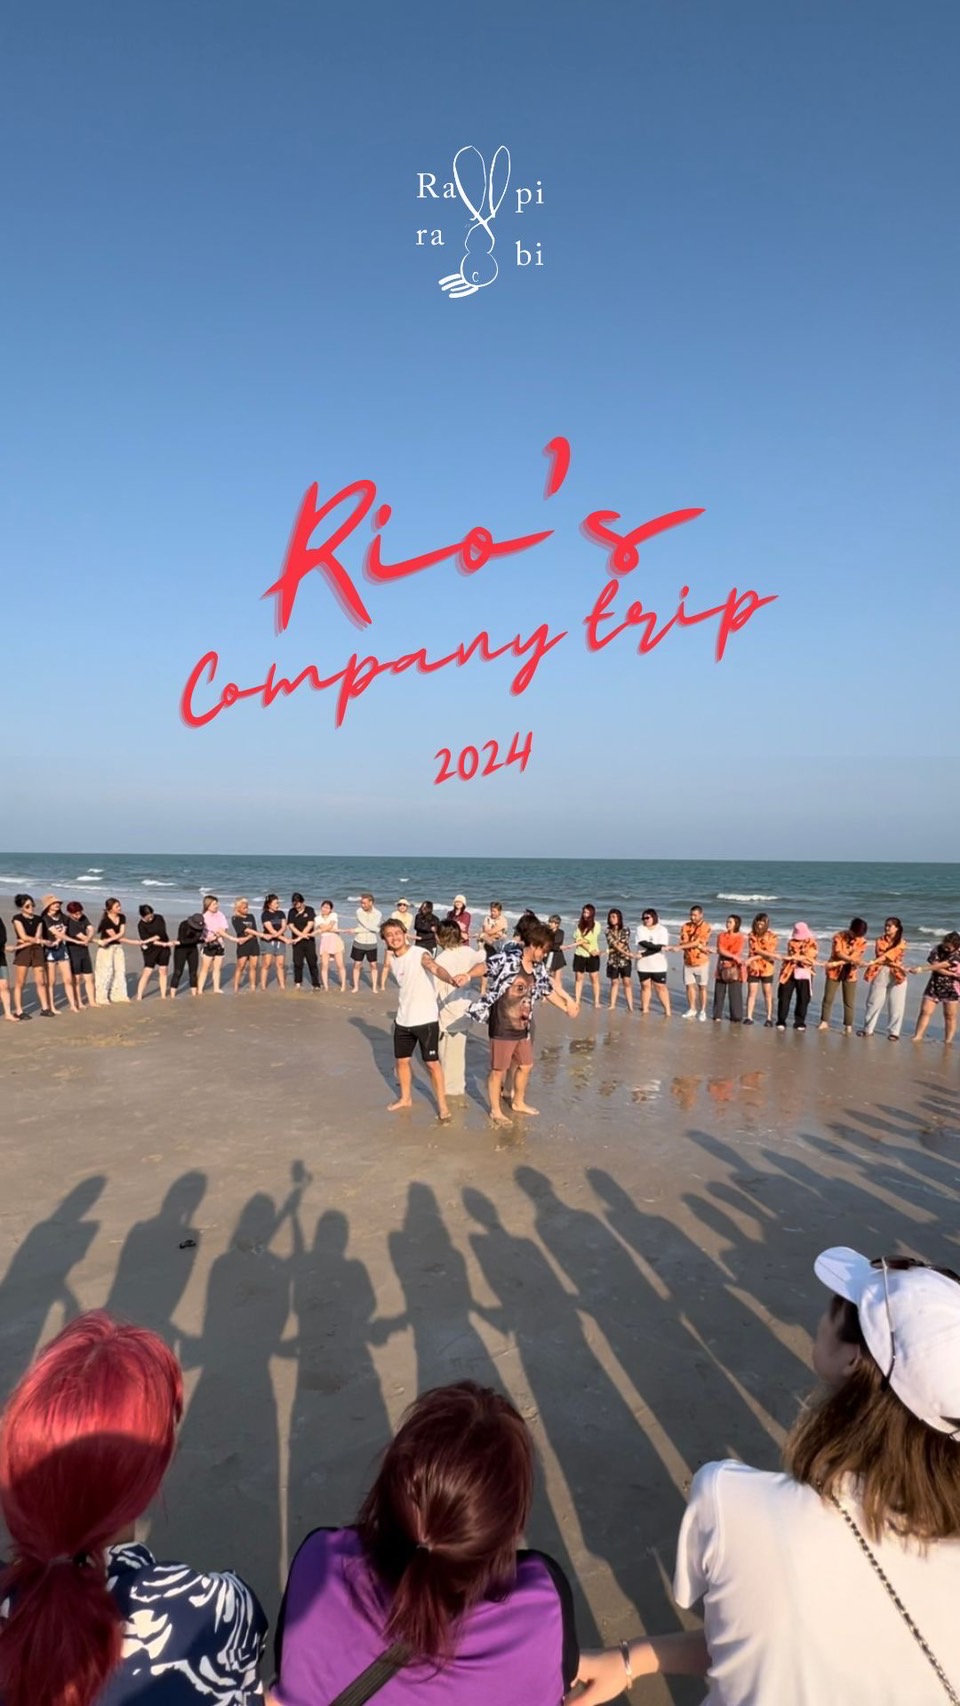 (TH) Rio's company trip 2024🏖 By Rapi-rabi